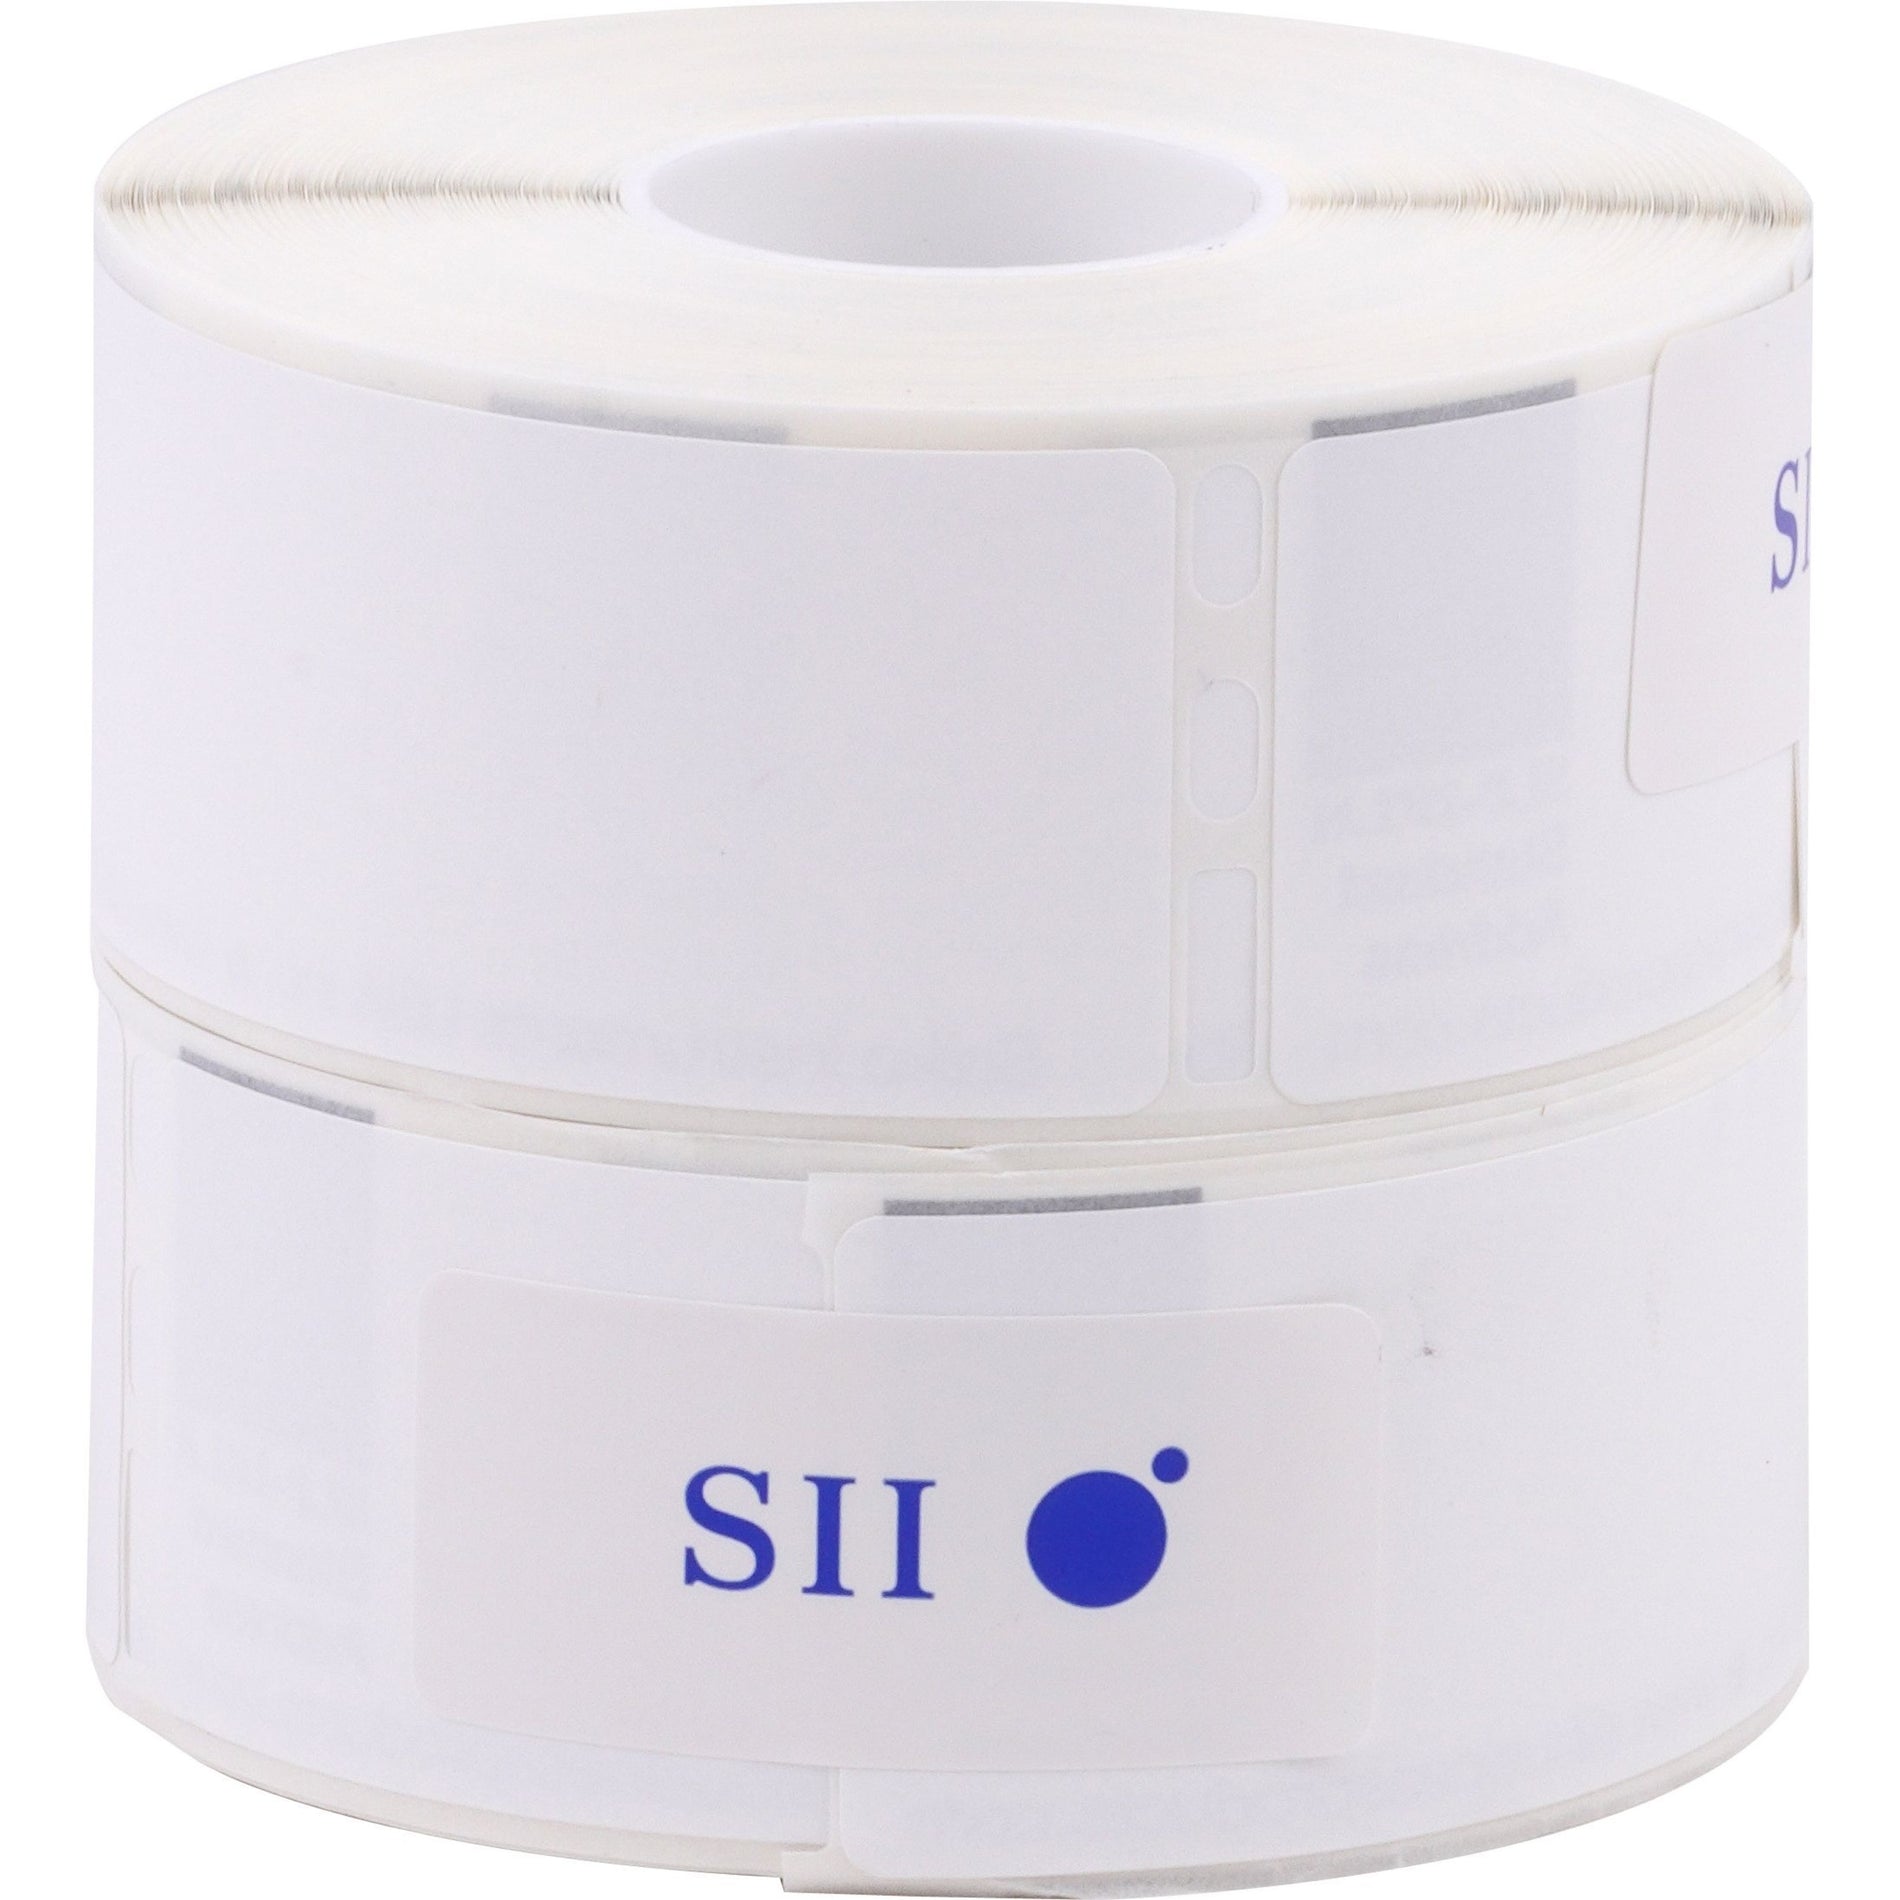 Seiko SLP-2RLH SmartLabels Large Capacity Address Label Rolls, 1-1/8"x3-1/2", 260/Roll, White